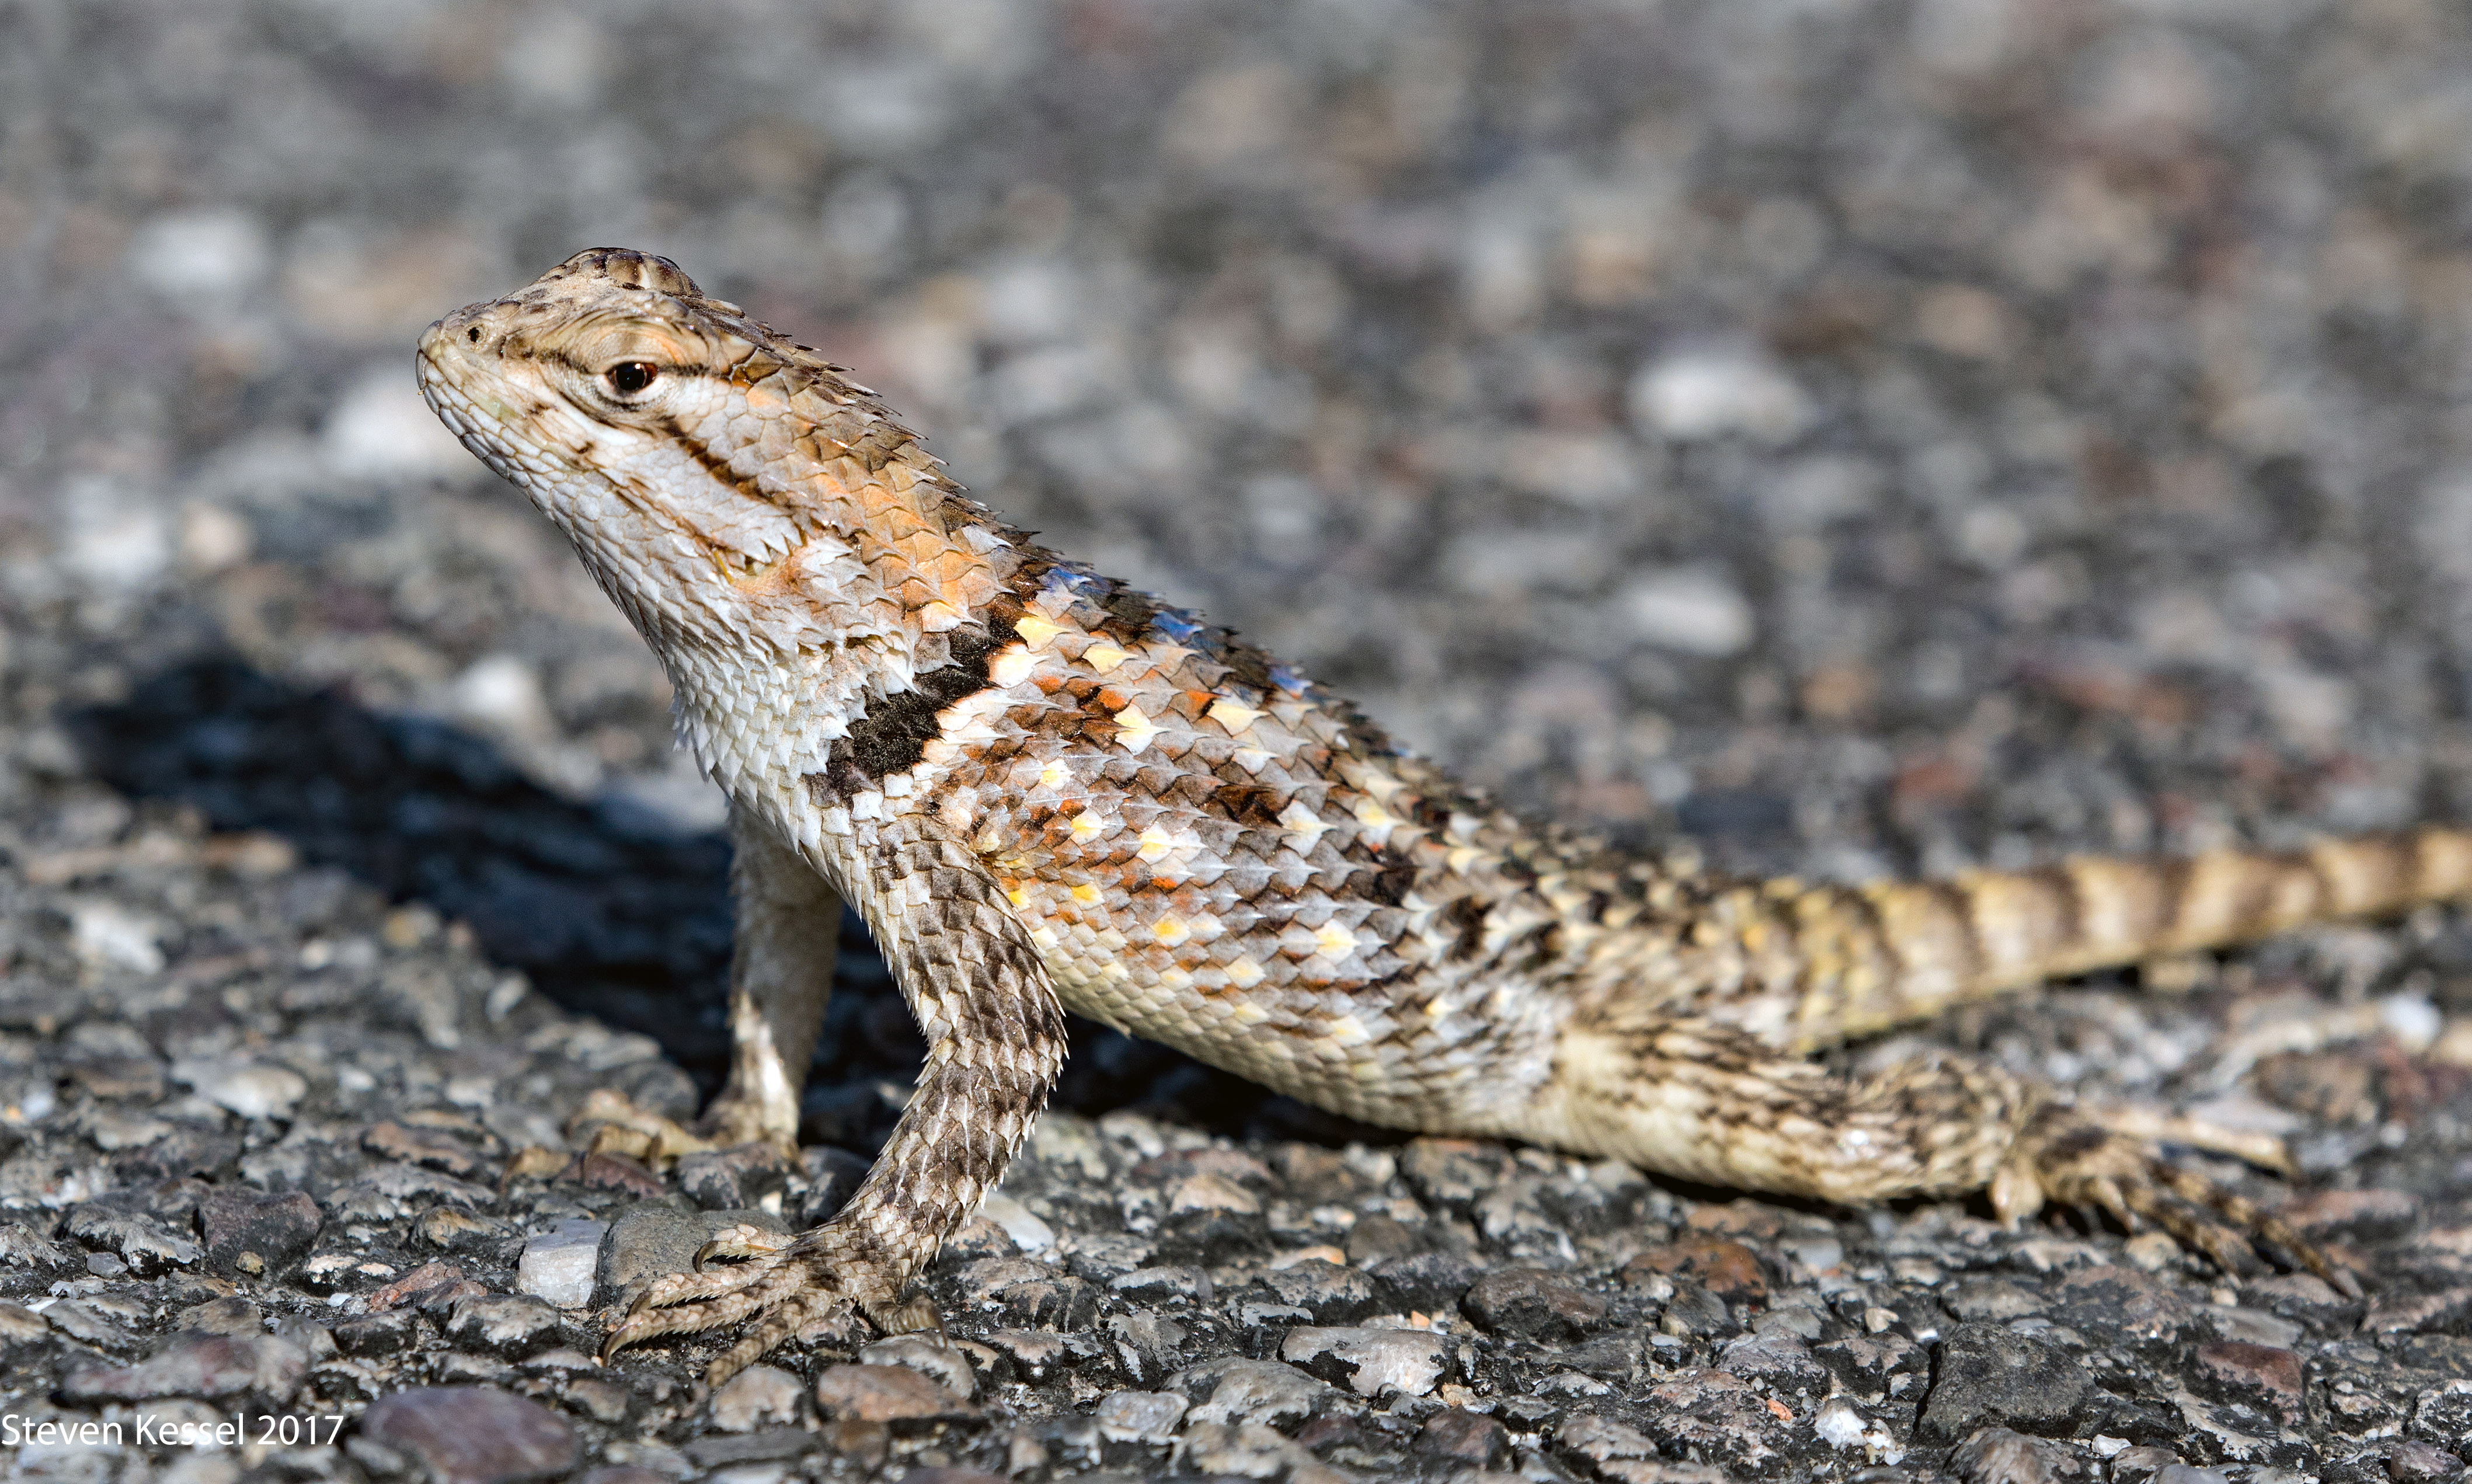 Female Desert Spiny Lizard | Sonoran Images